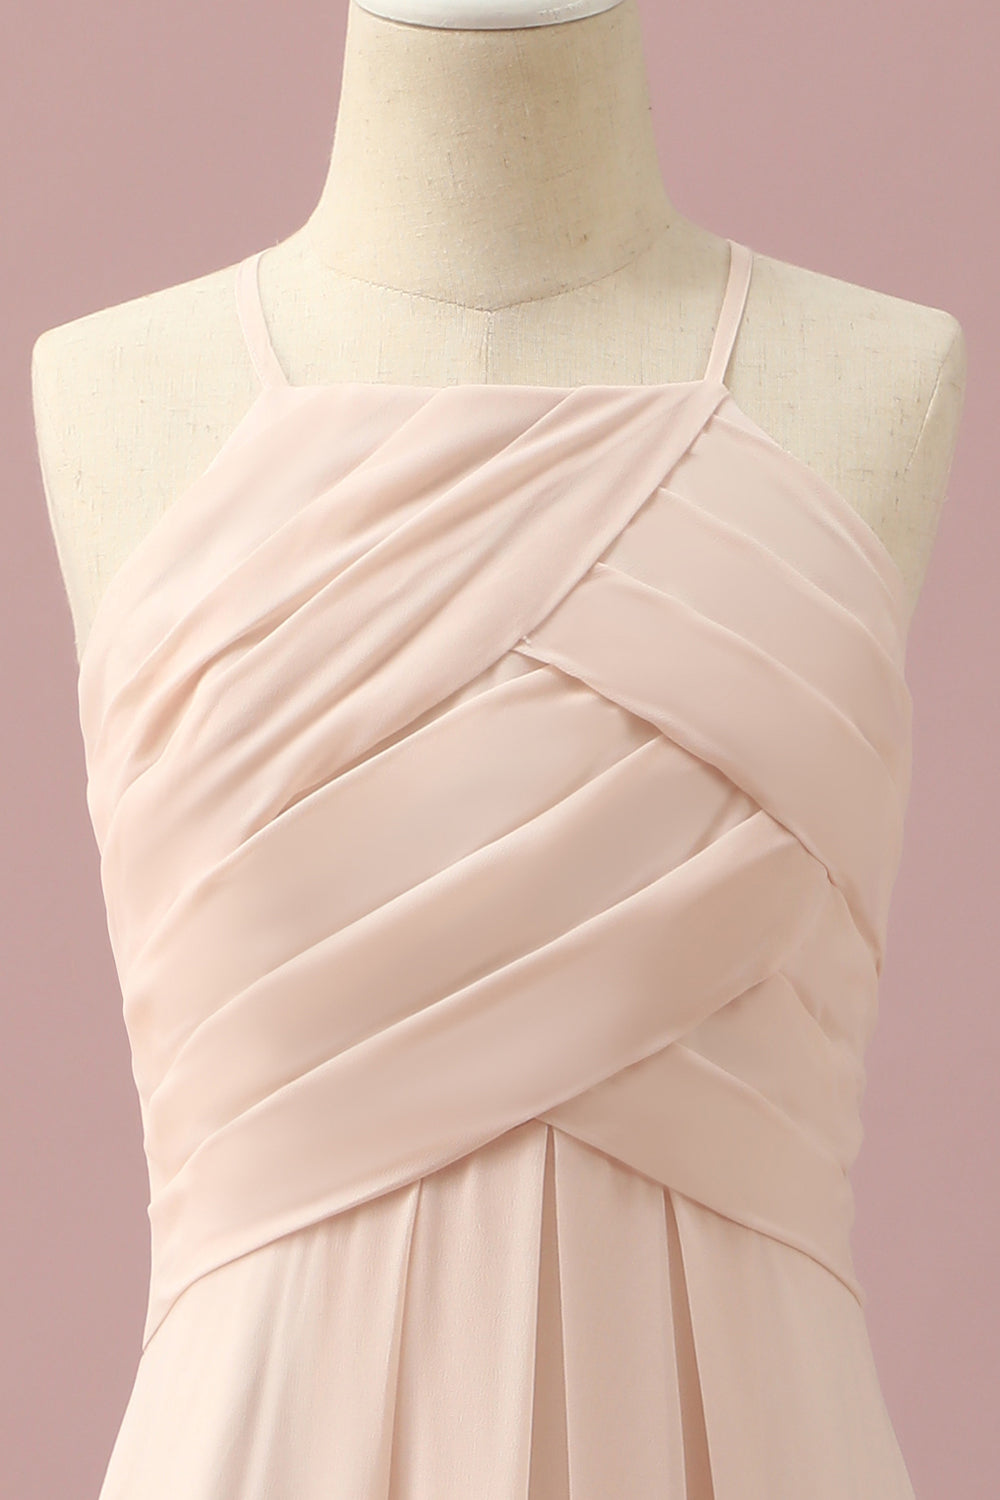 Ivory A-Line Halter Floor Length Chiffon Junior Bridesmaid Dress